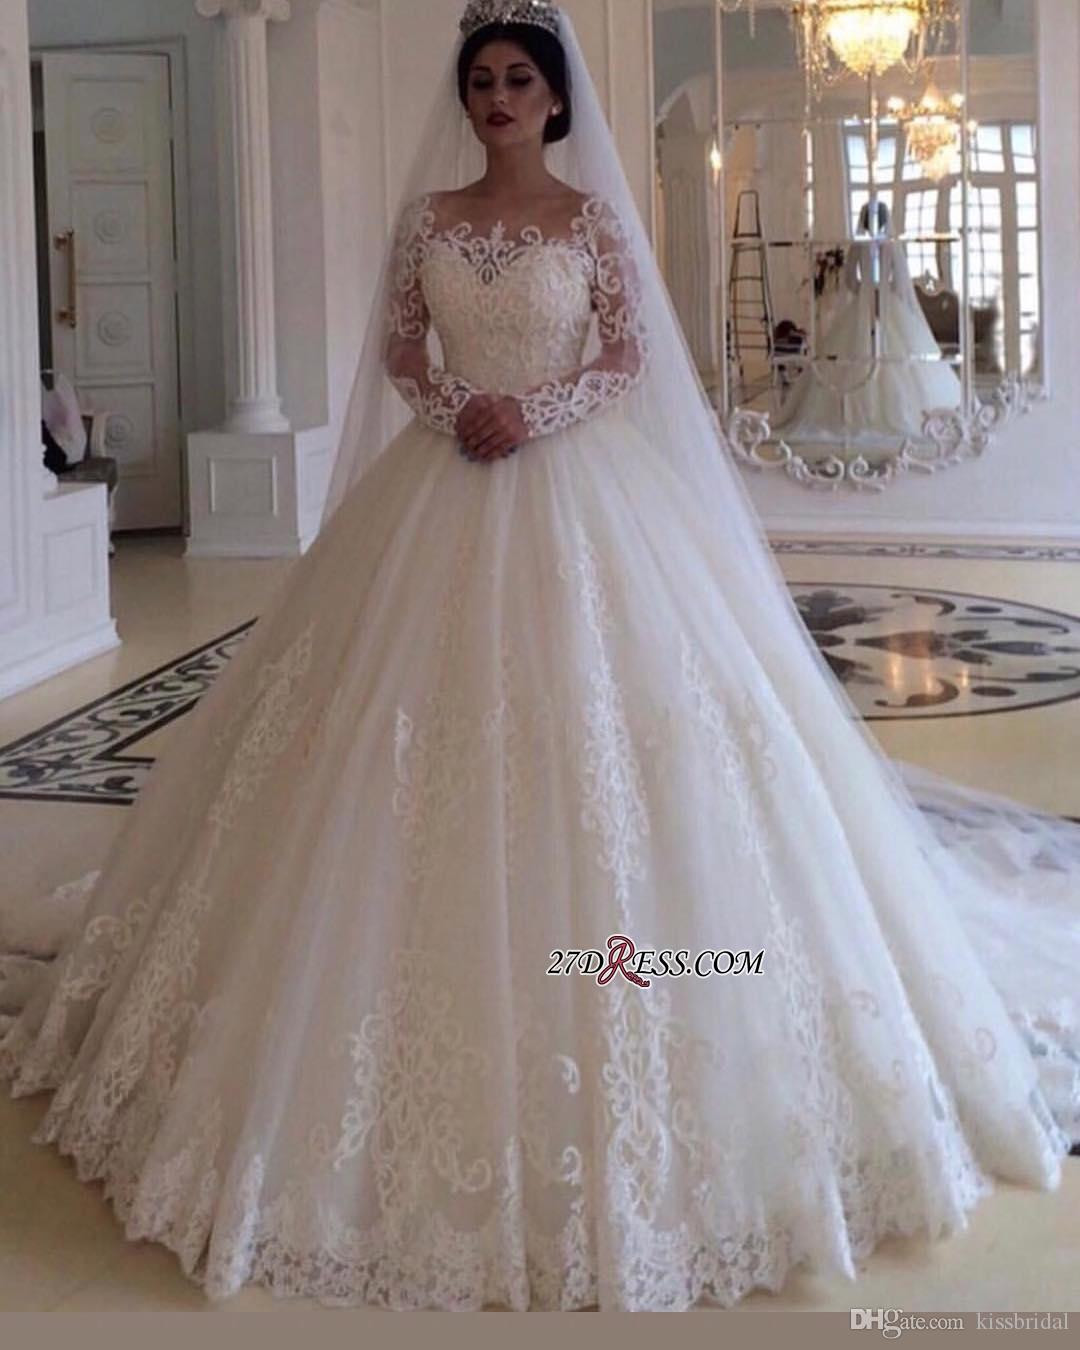 Big Wedding Dresses
 Long Sleeve Lace Wedding Dresses 2019 Elegant Ball Gown